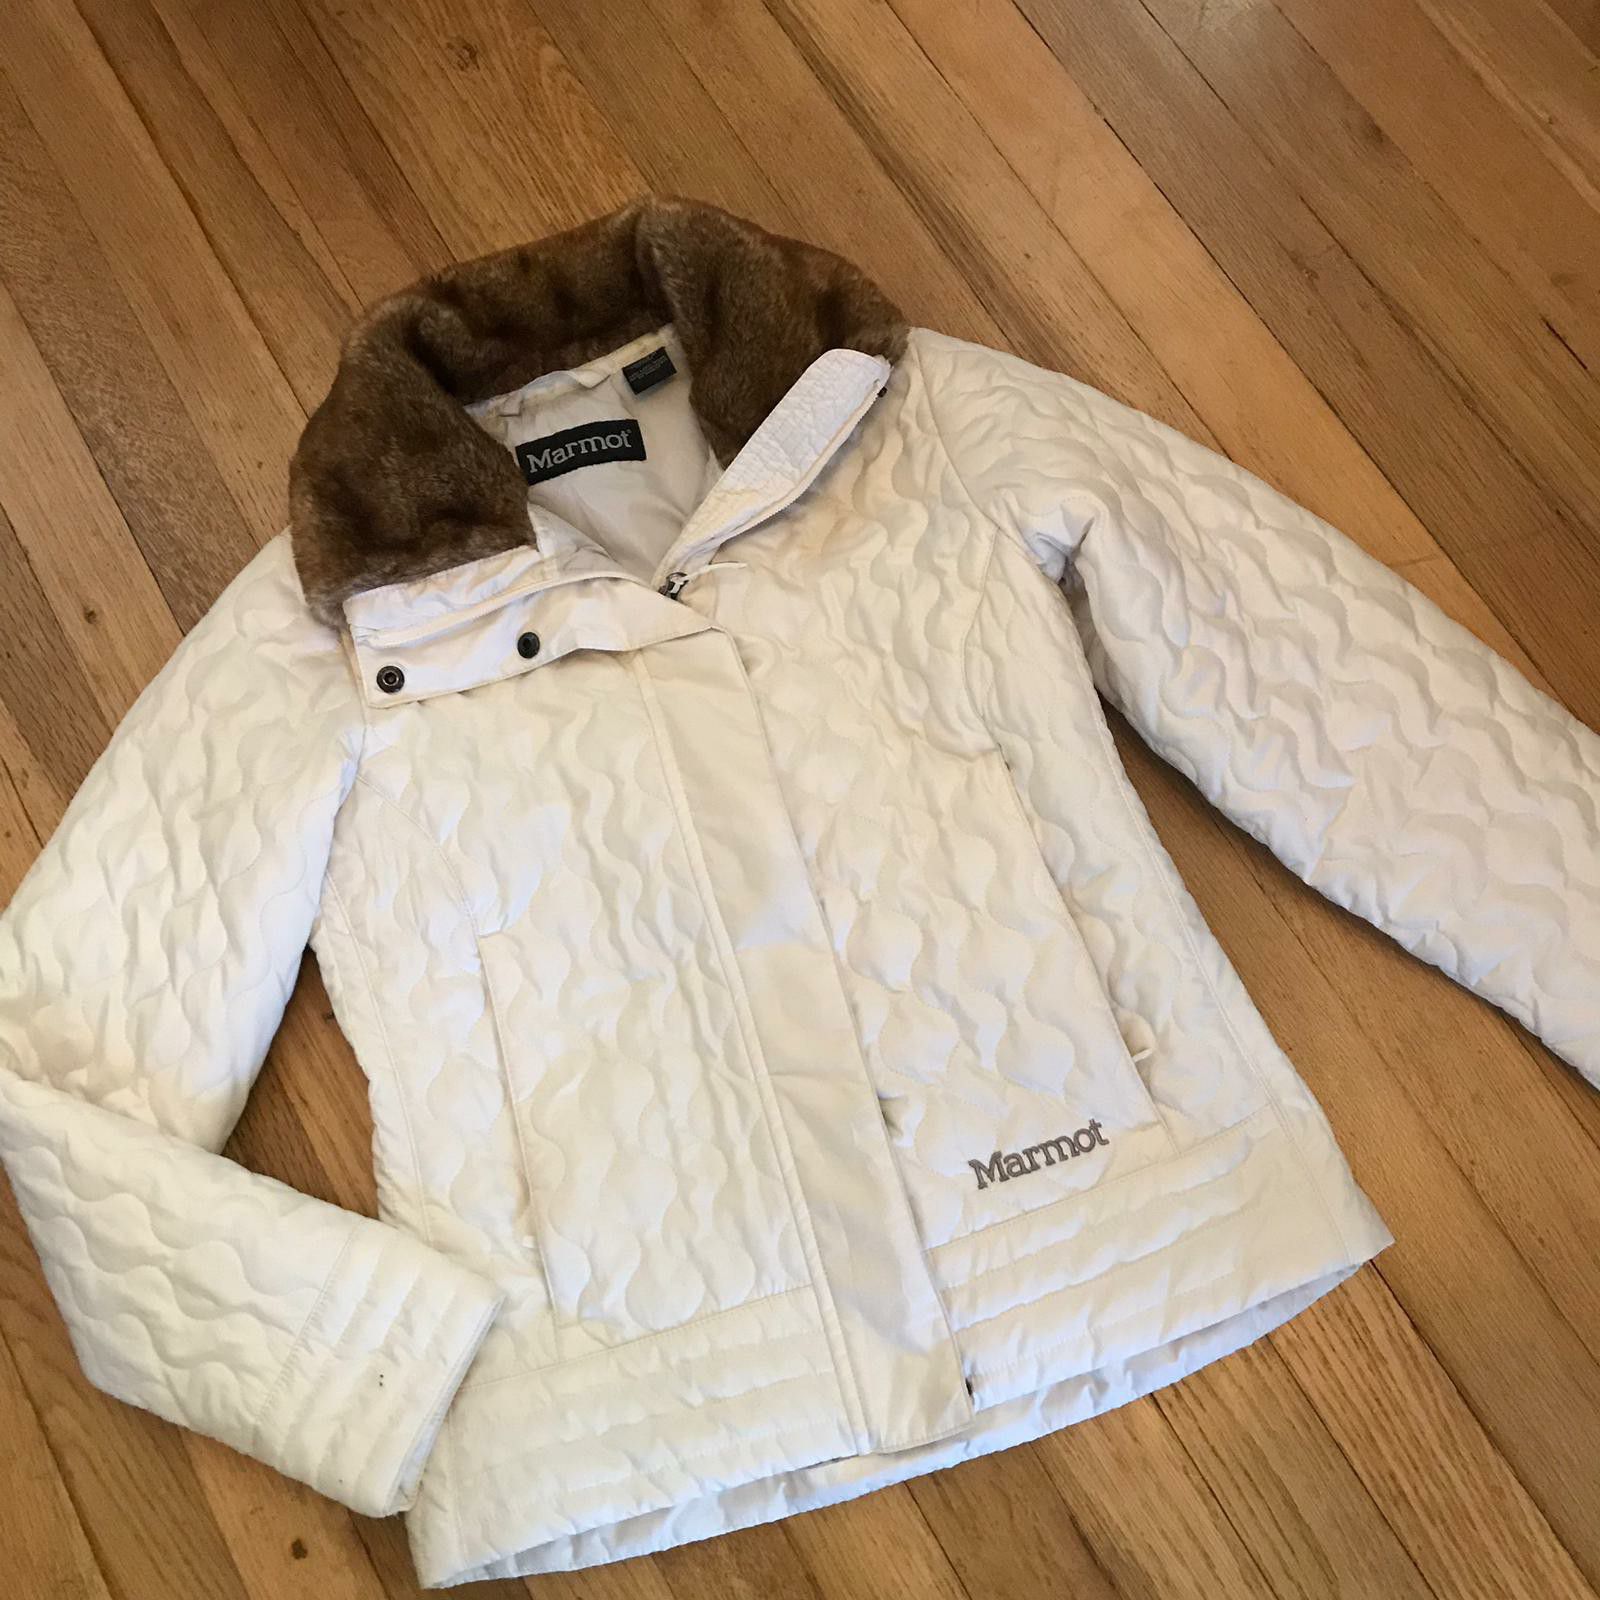 S* Marmot jacket